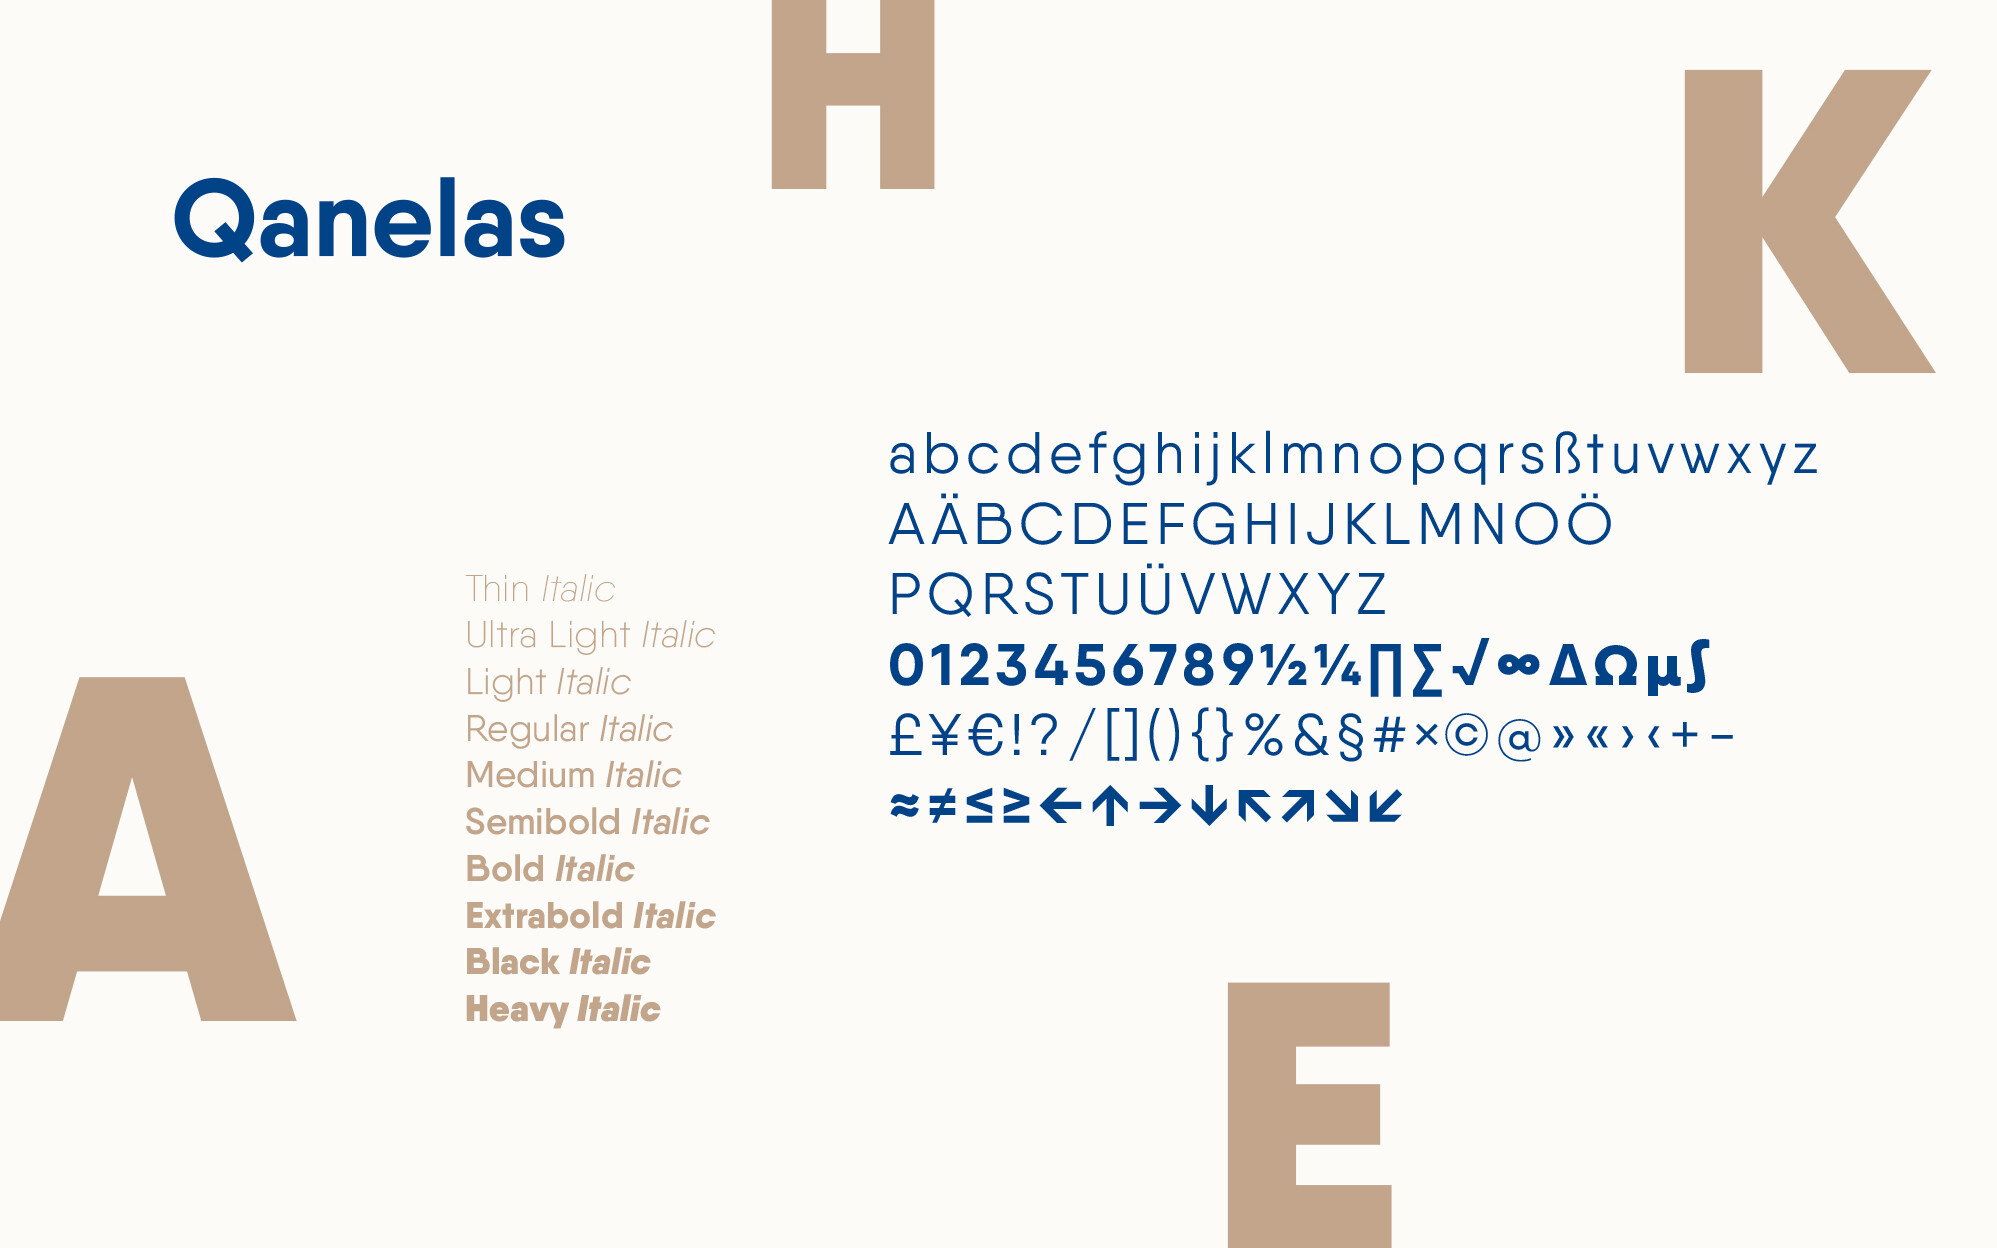 Corporate Design / Typografie Qanelas